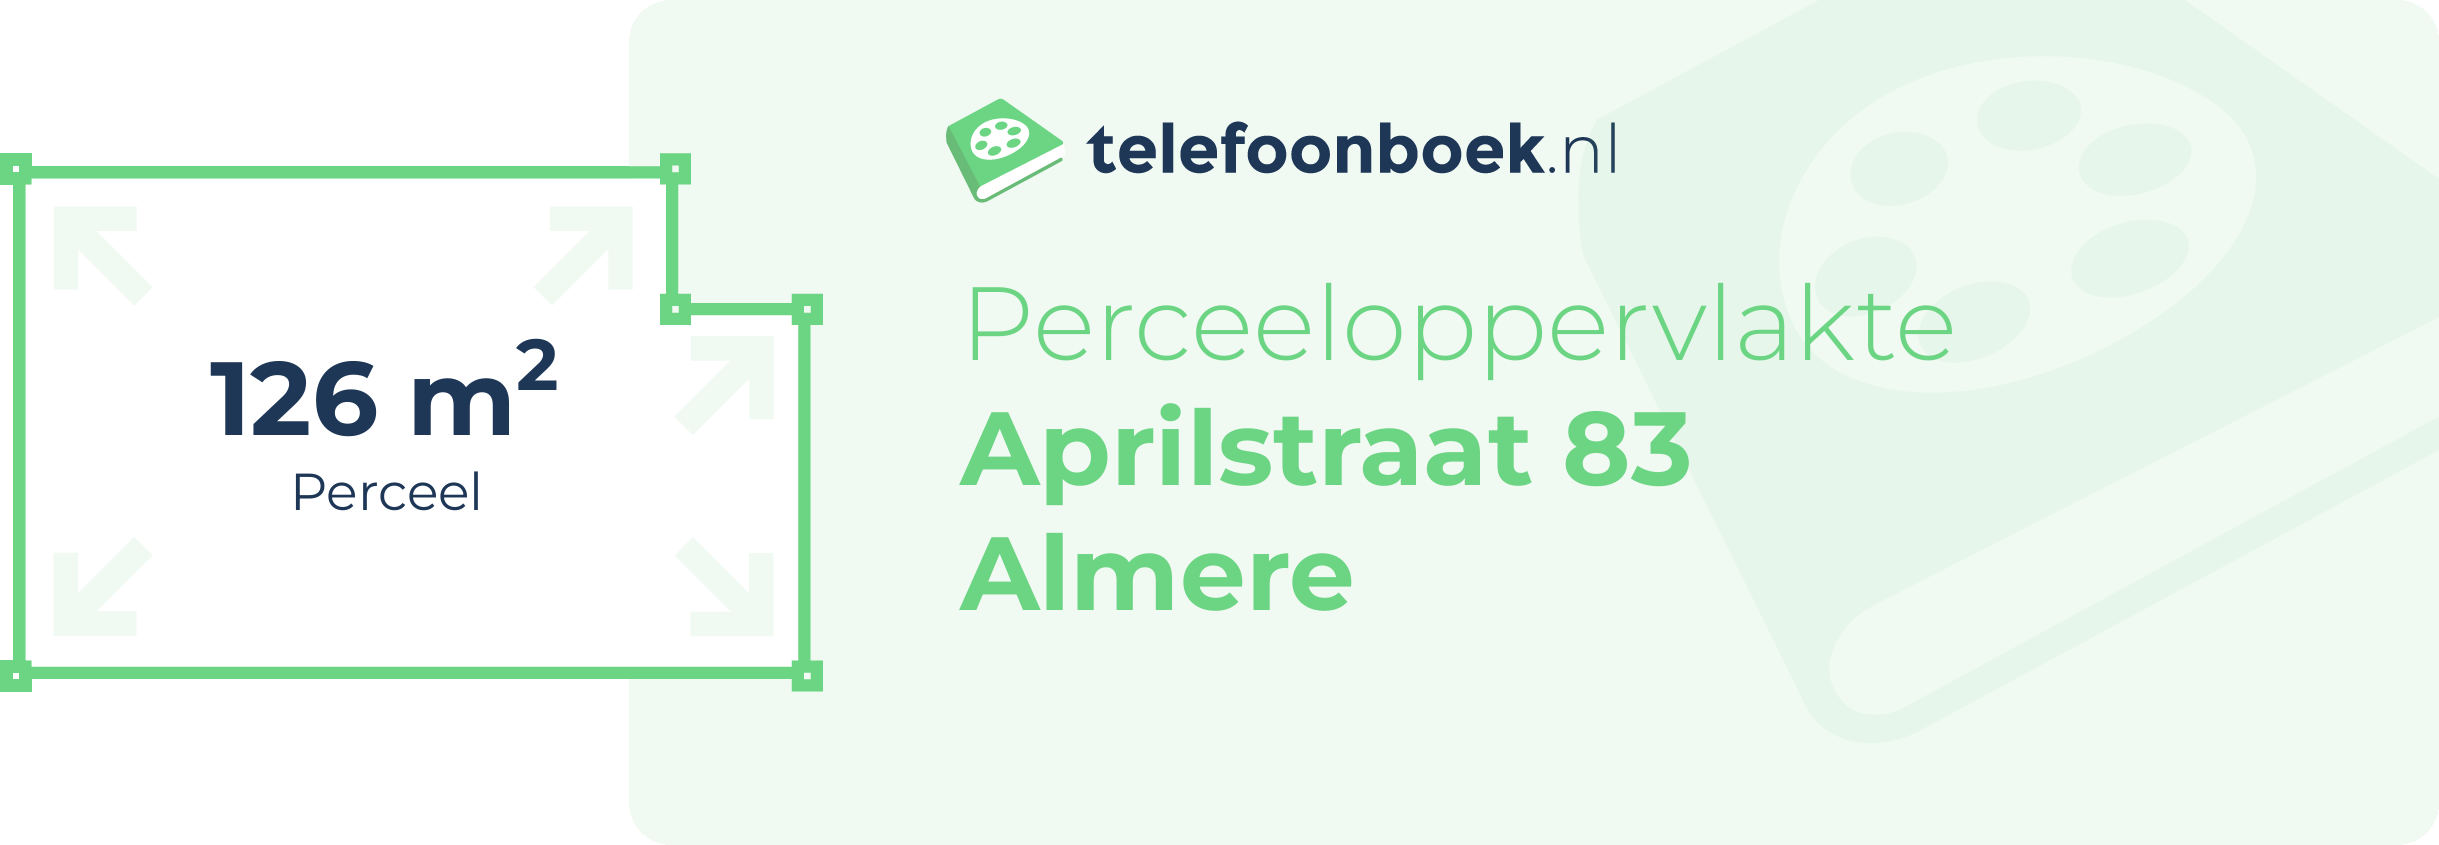 Perceeloppervlakte Aprilstraat 83 Almere